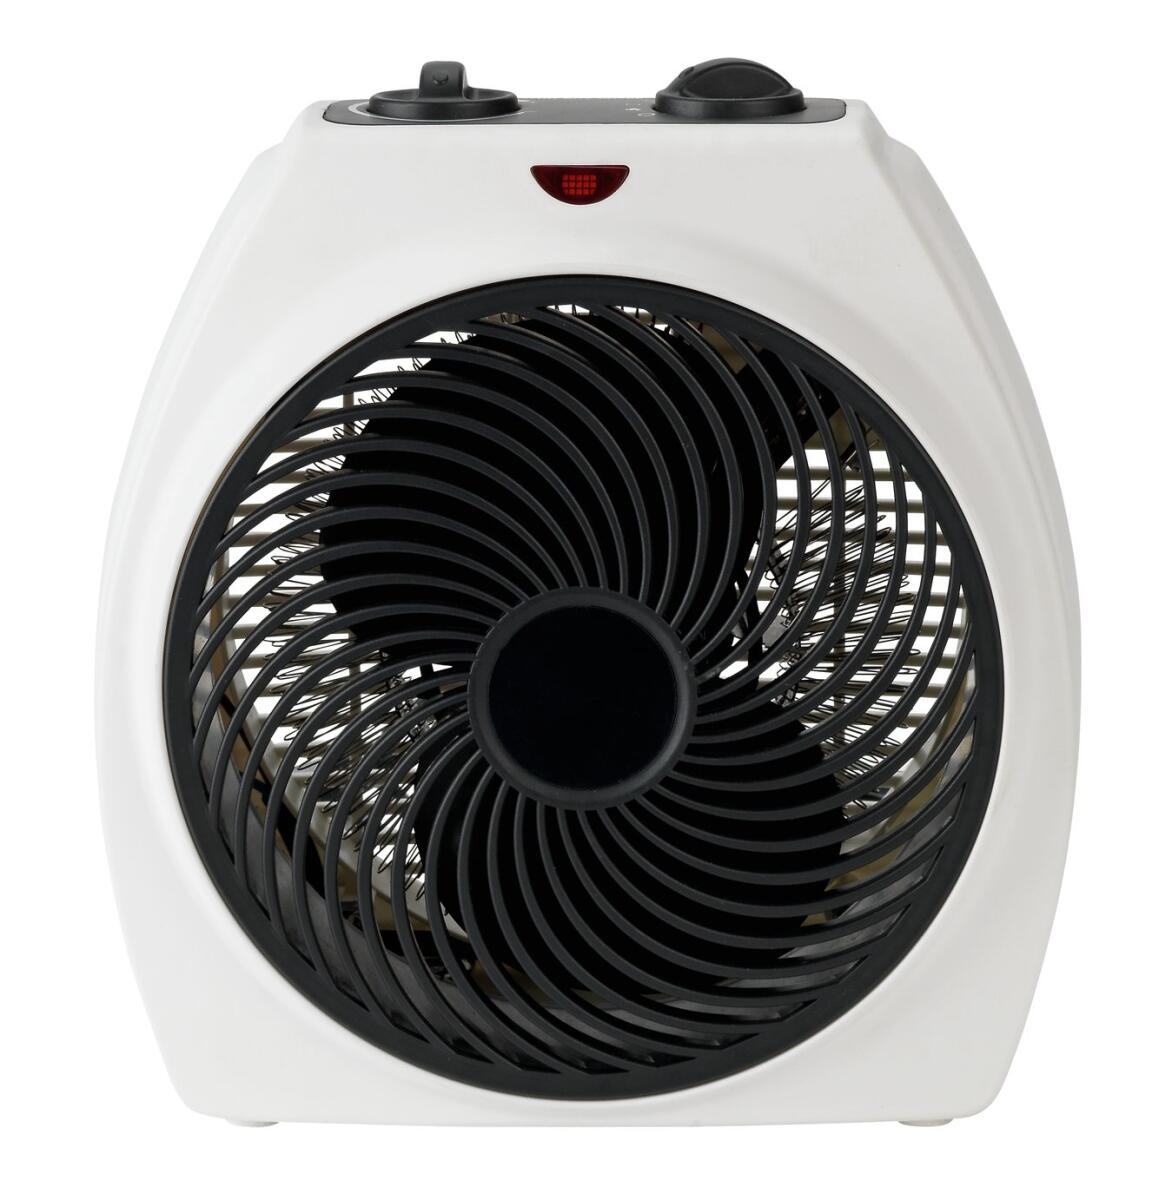 Simple Value 2kw Upright Fan Heater 499 Argos Hotukdeals for measurements 1172 X 1200